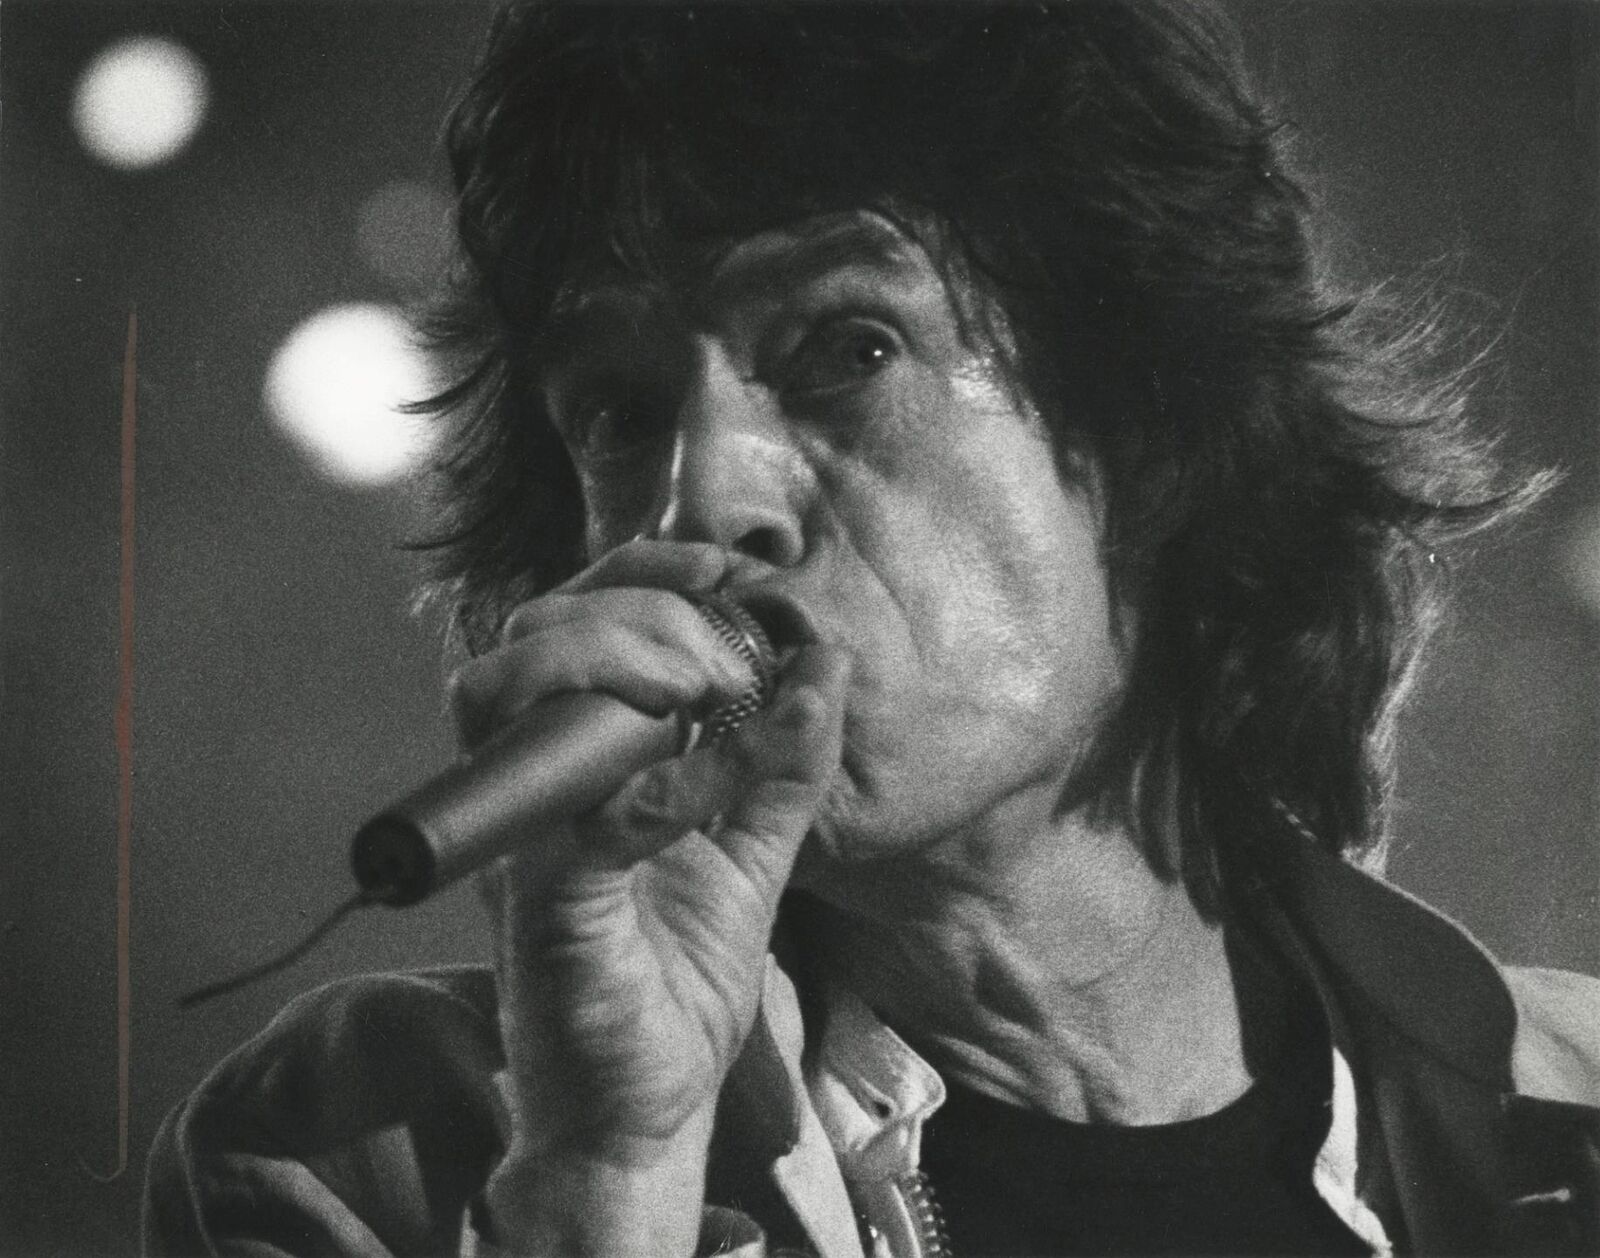 1994 Mick Jagger Performing at Camp Randall Stadium Photo by William J. Lizdas